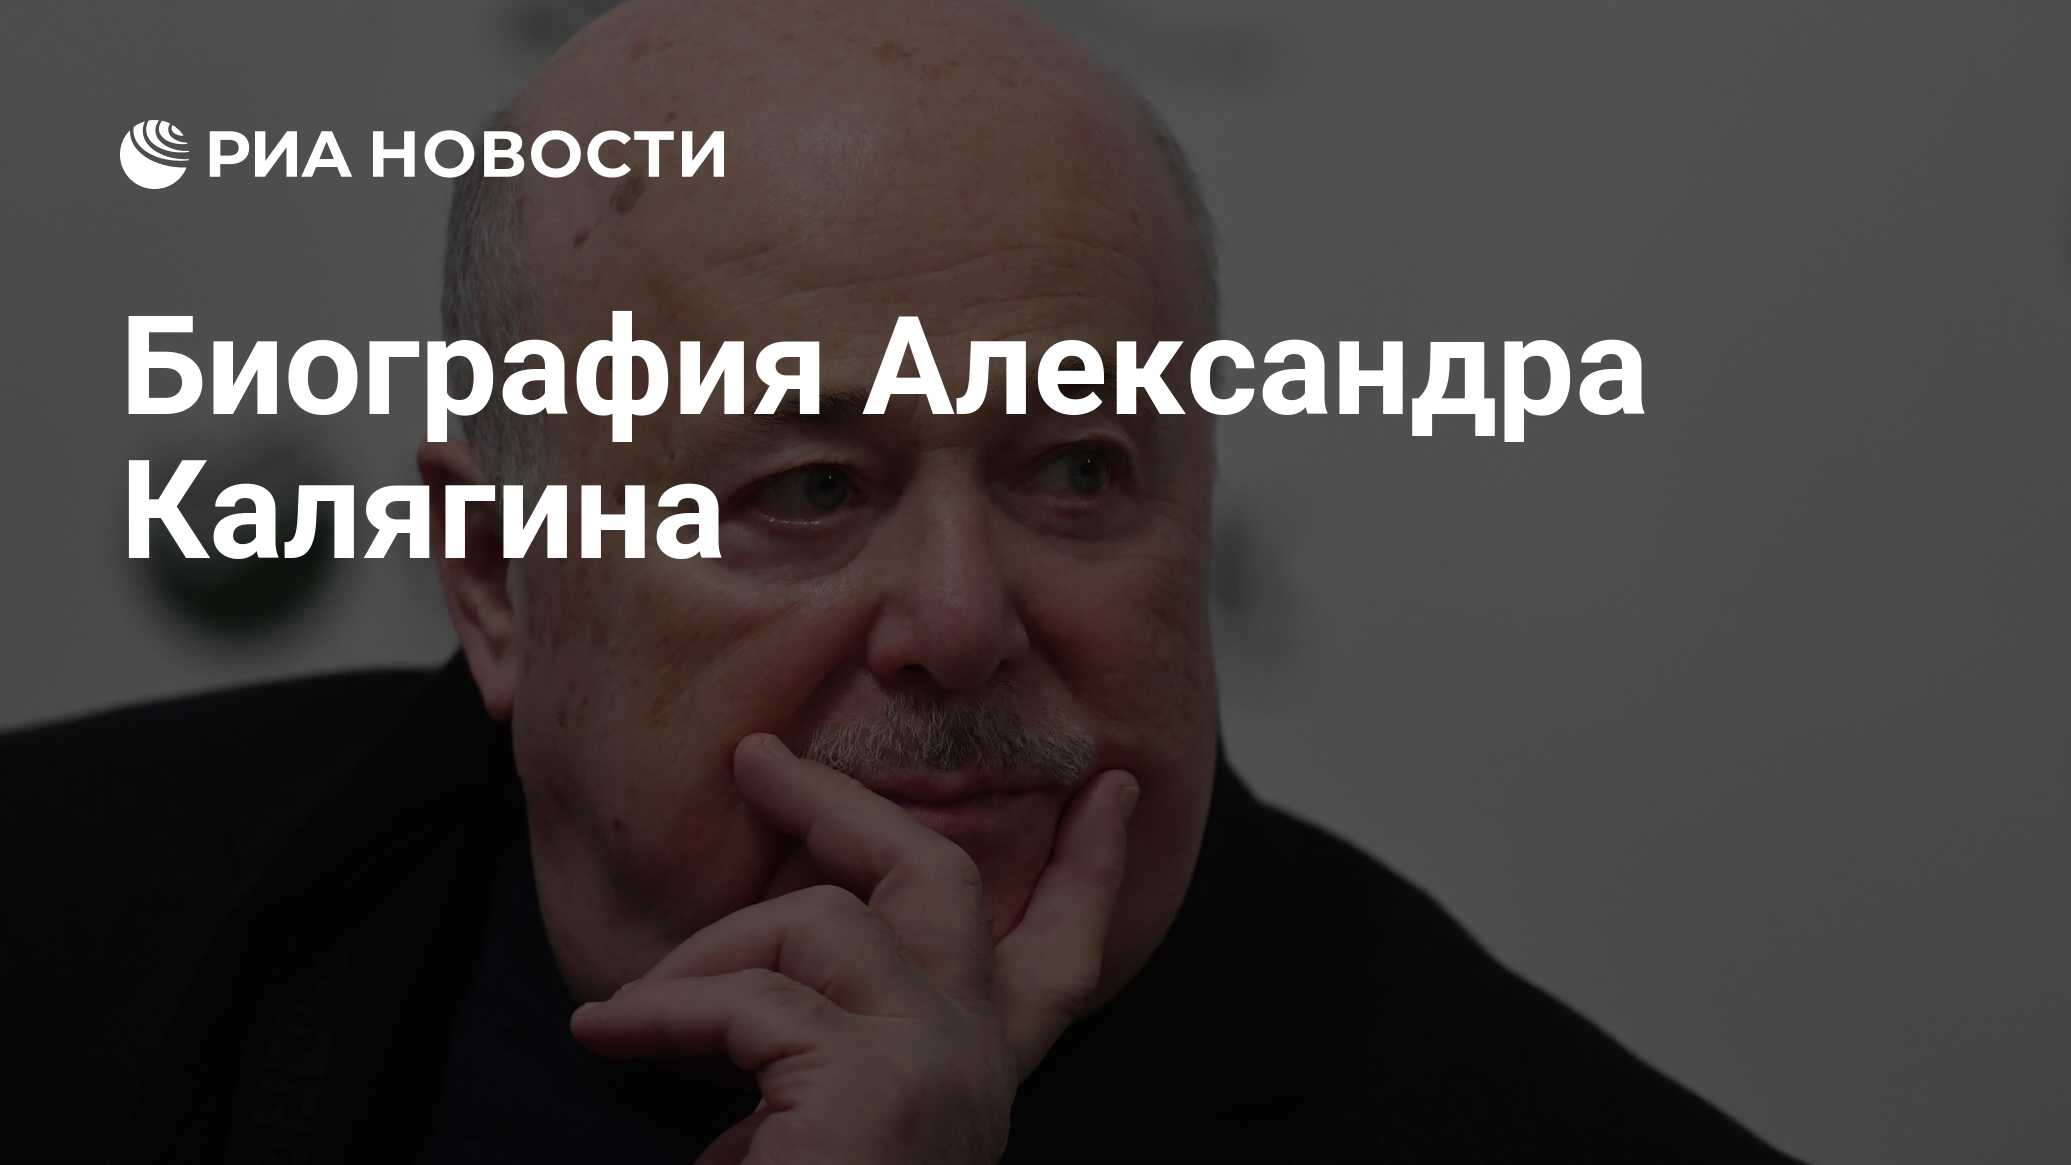 Биография Александра Калягина - РИА Новости, 25.05.2022